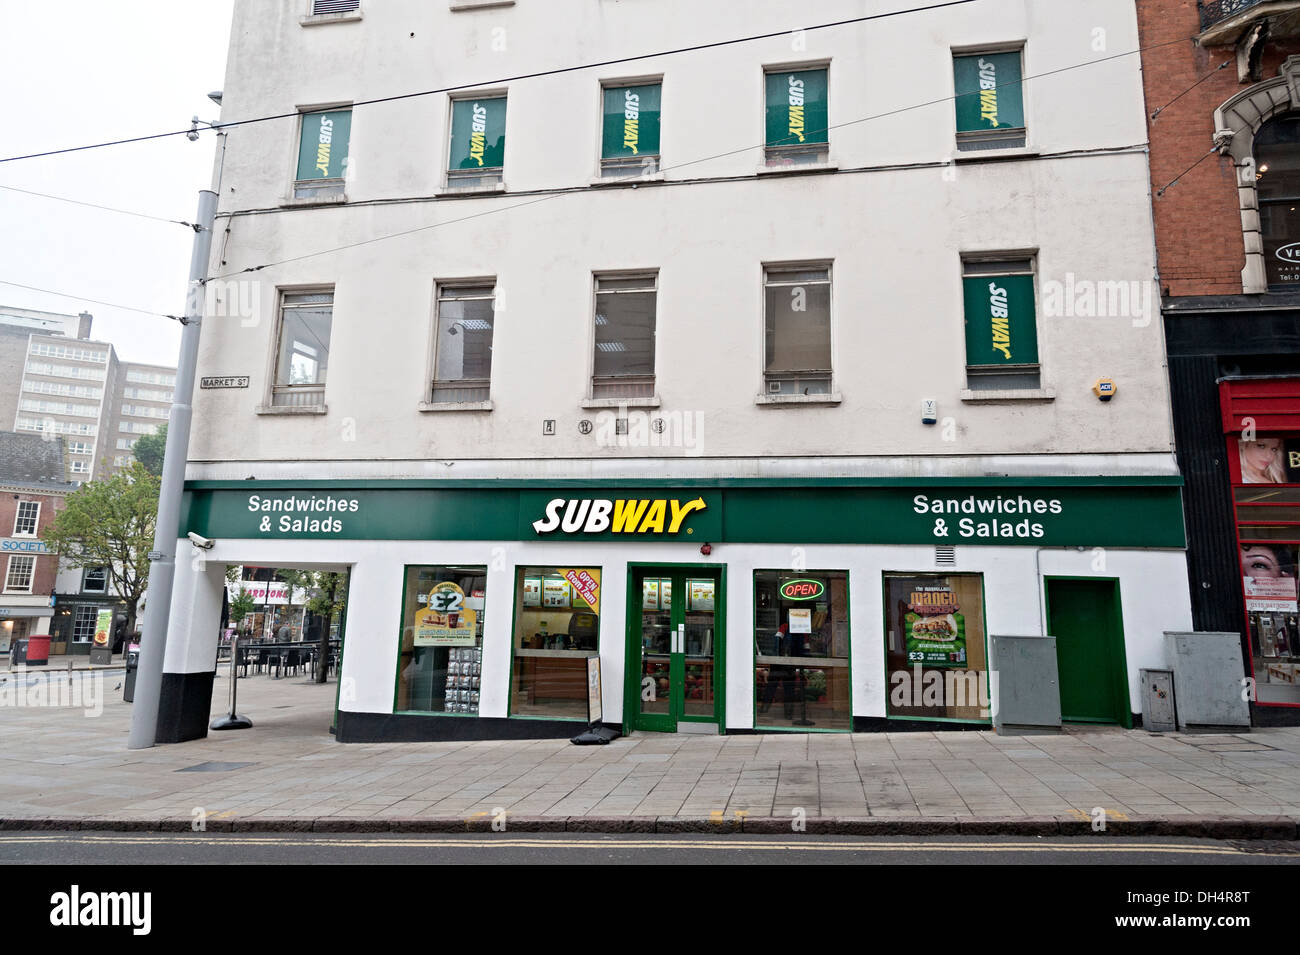 subway restaurant fast food sandwich bar in Nottingham england Stock Photo